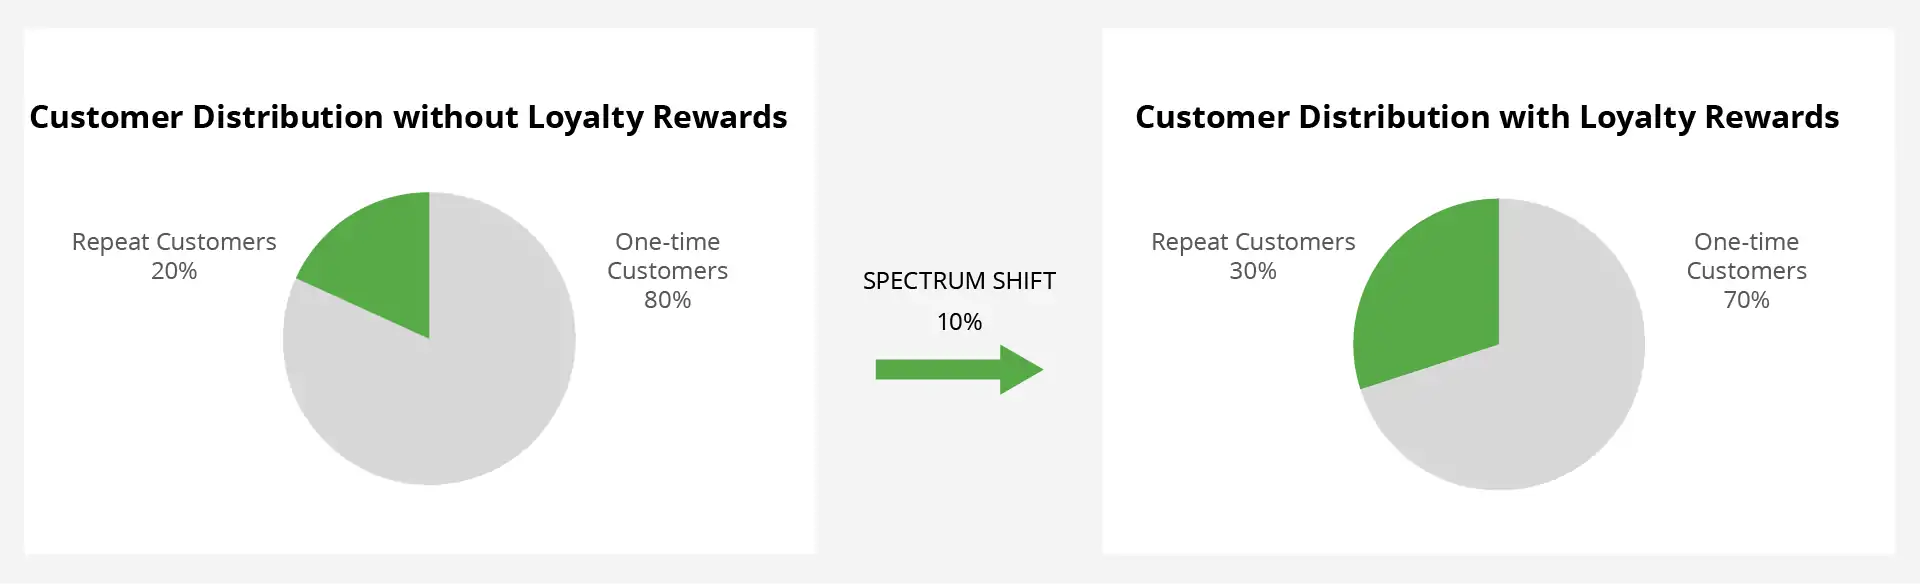 Loyalty rewards spectrum shift